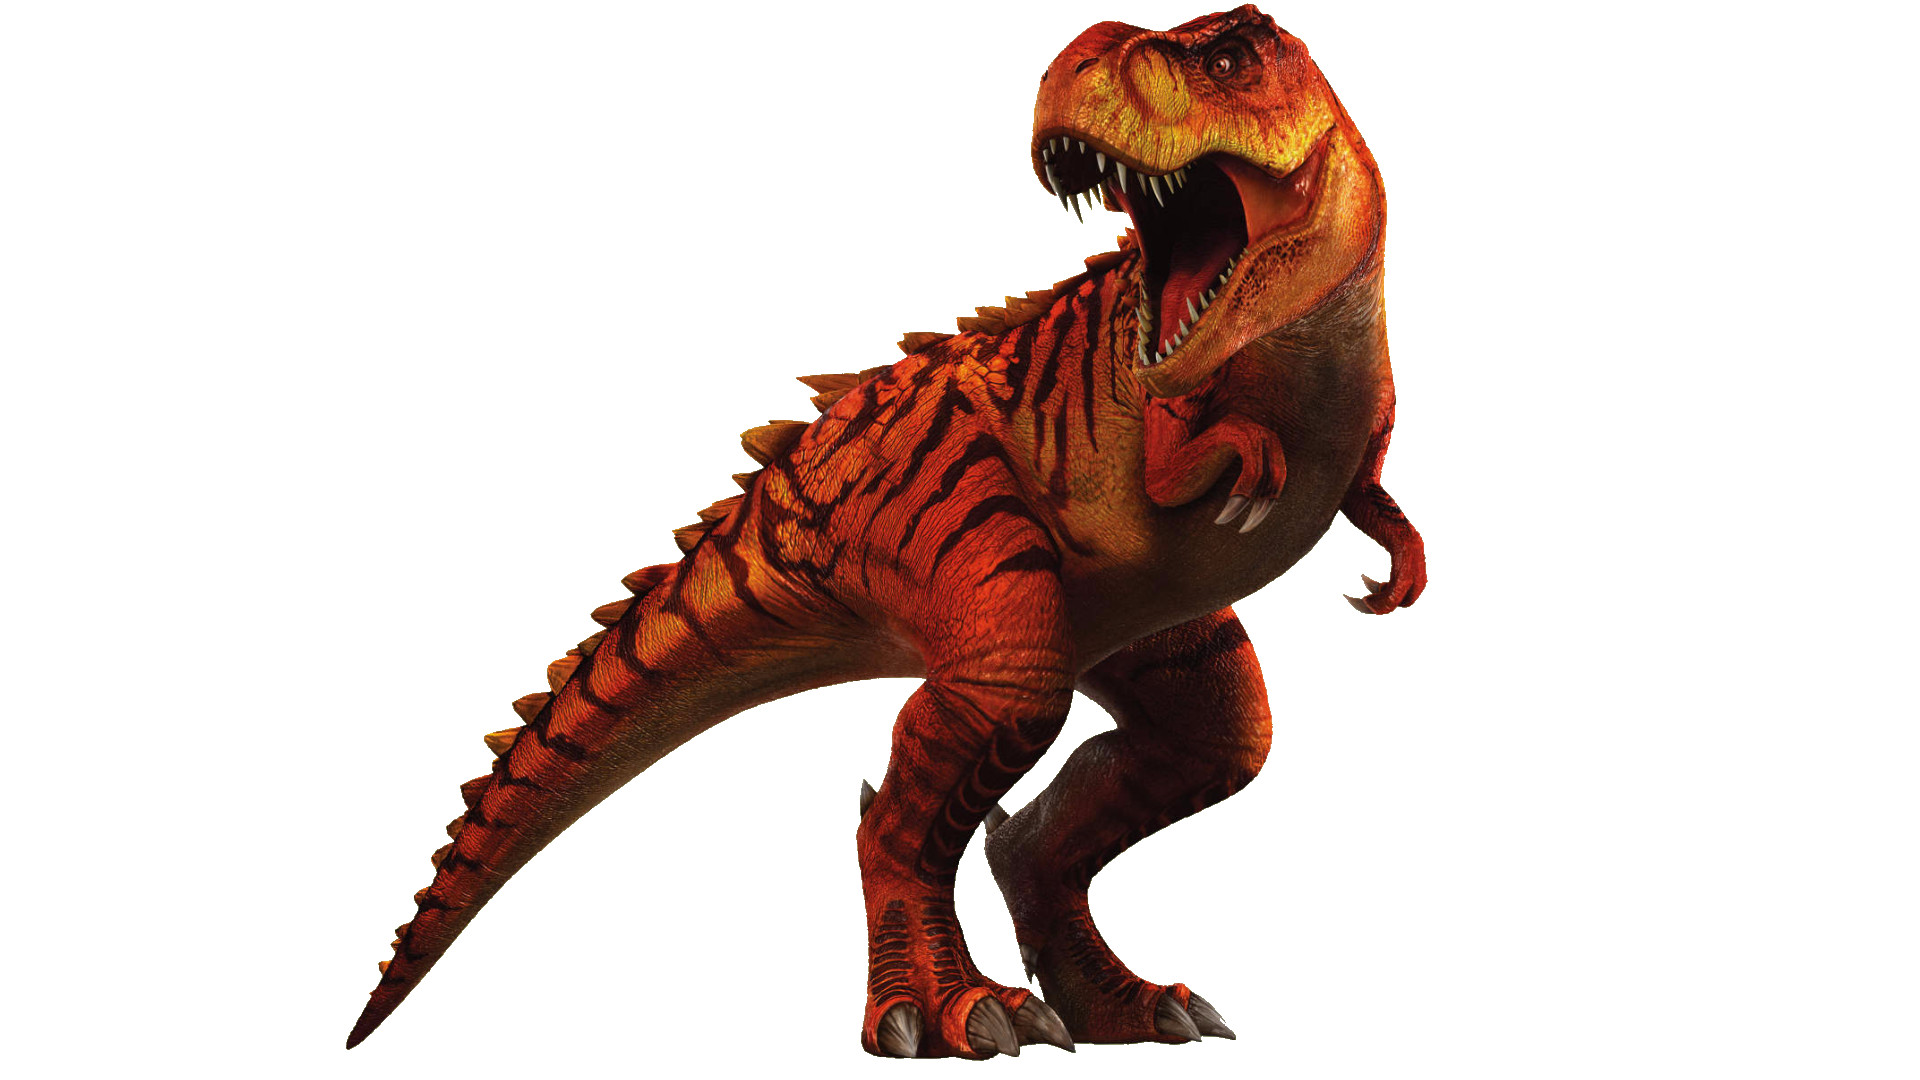 1920x1080 ... sonichedgehog2 Jurassic World The Game: Hybrid T-Rex by sonichedgehog2